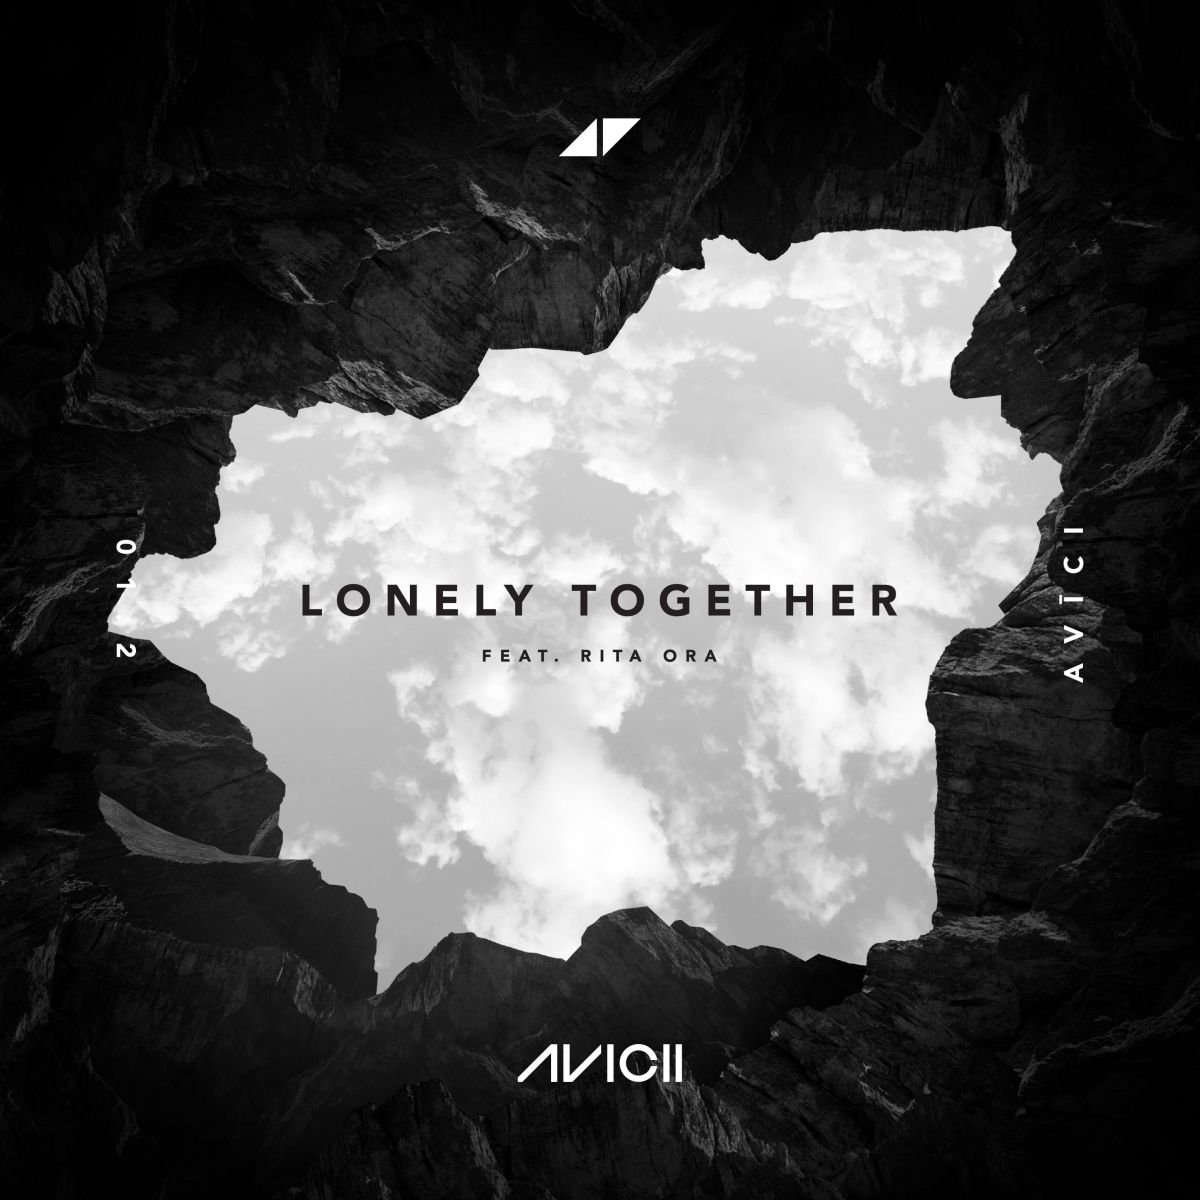 Avicii featuring Rita Ora — Lonely Together cover artwork